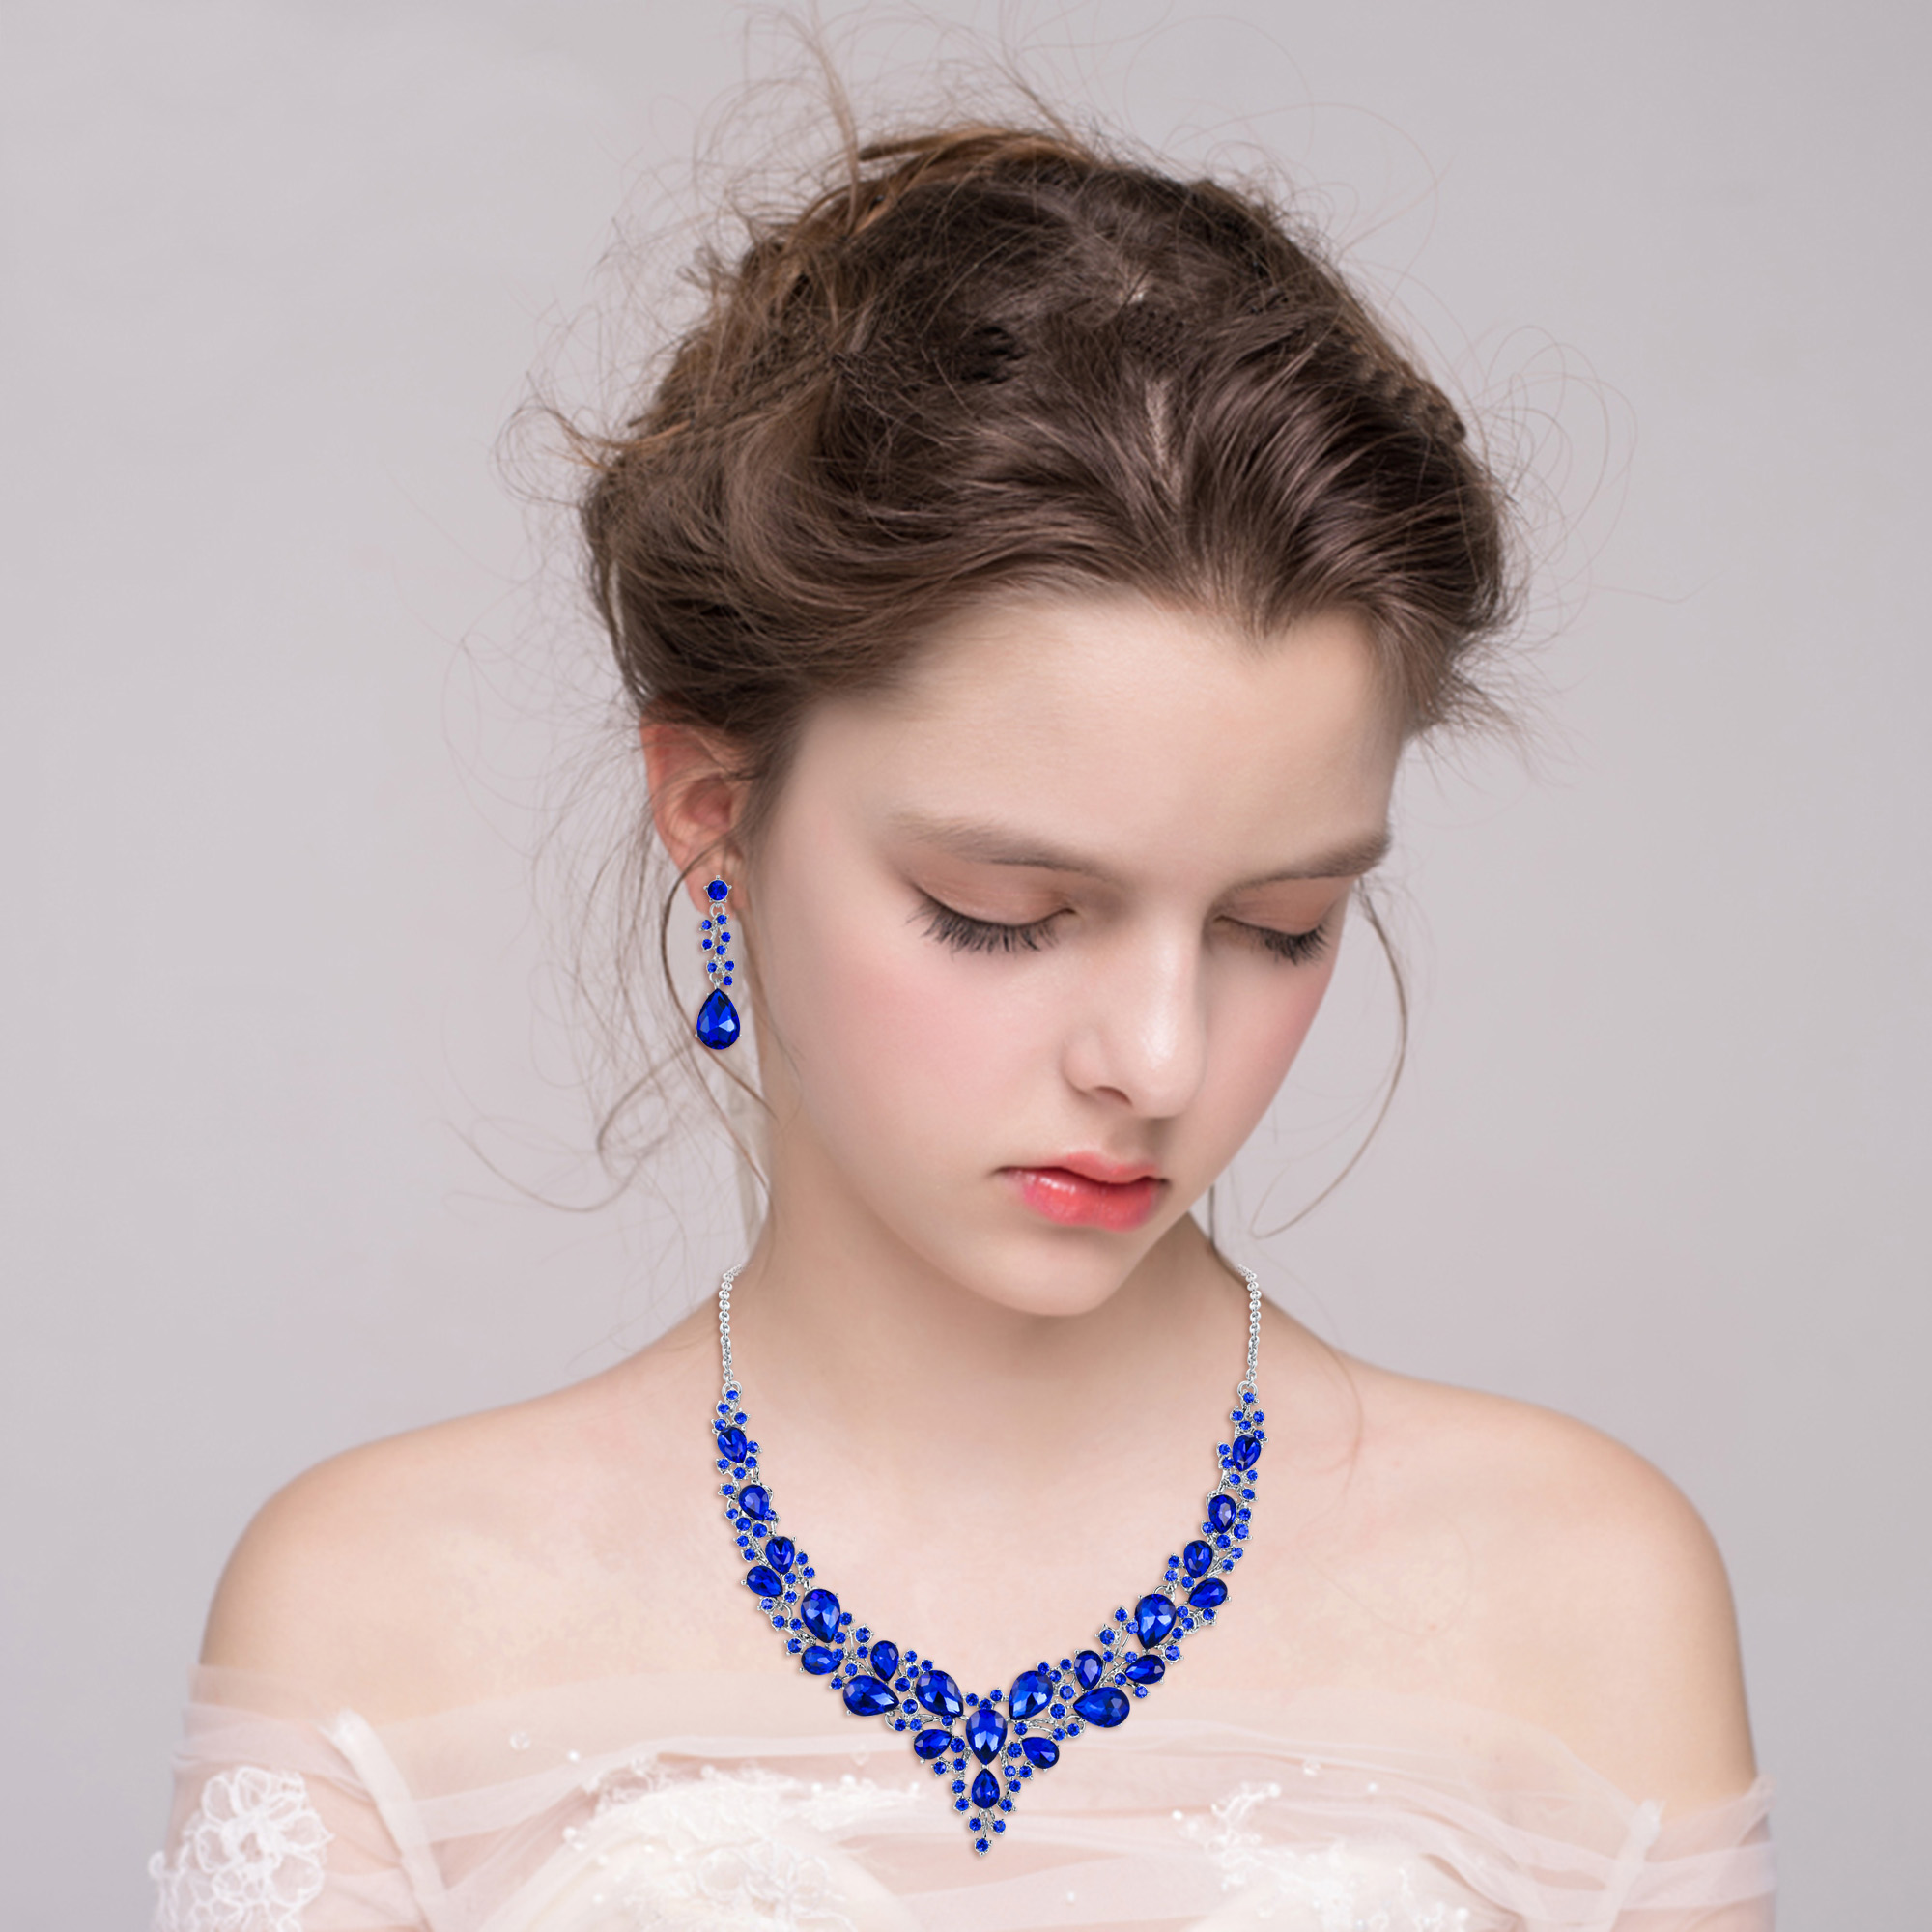 Wedure Wedding Bridal Necklace Earrings Jewelry Set for Women, Austrian Crystal Teardrop Cluster Statement Necklace Dangle Earrings Set Blue Silver-Tone - image 3 of 5